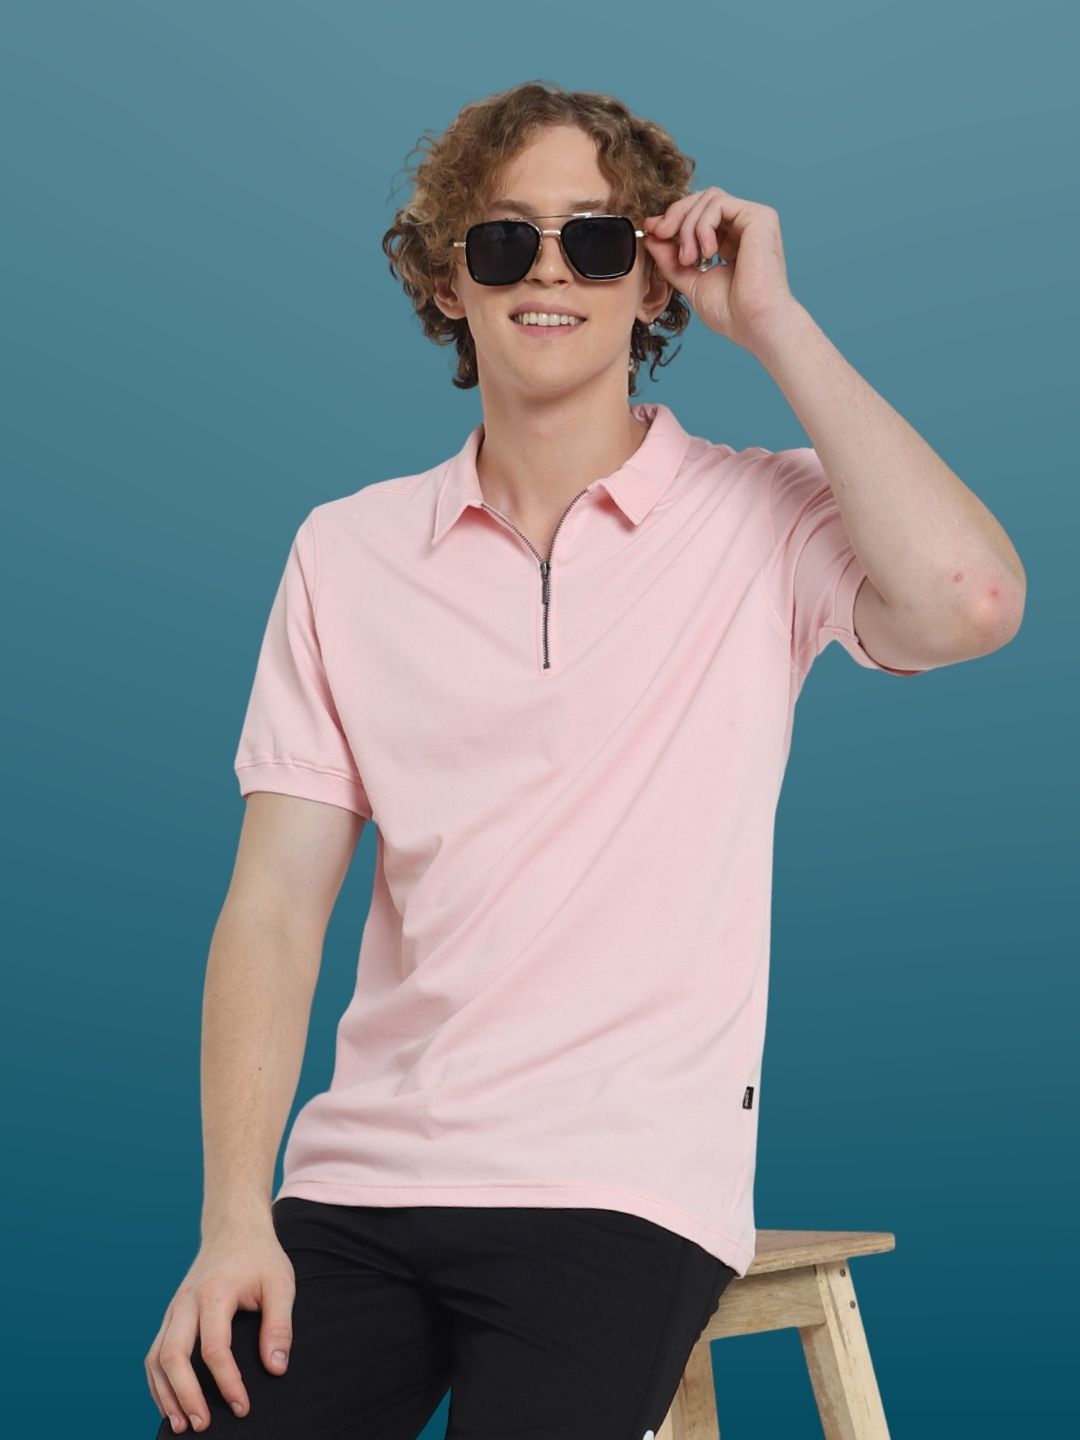 Blush Pink Polo Neck Zipper T-Shirt - Wearduds